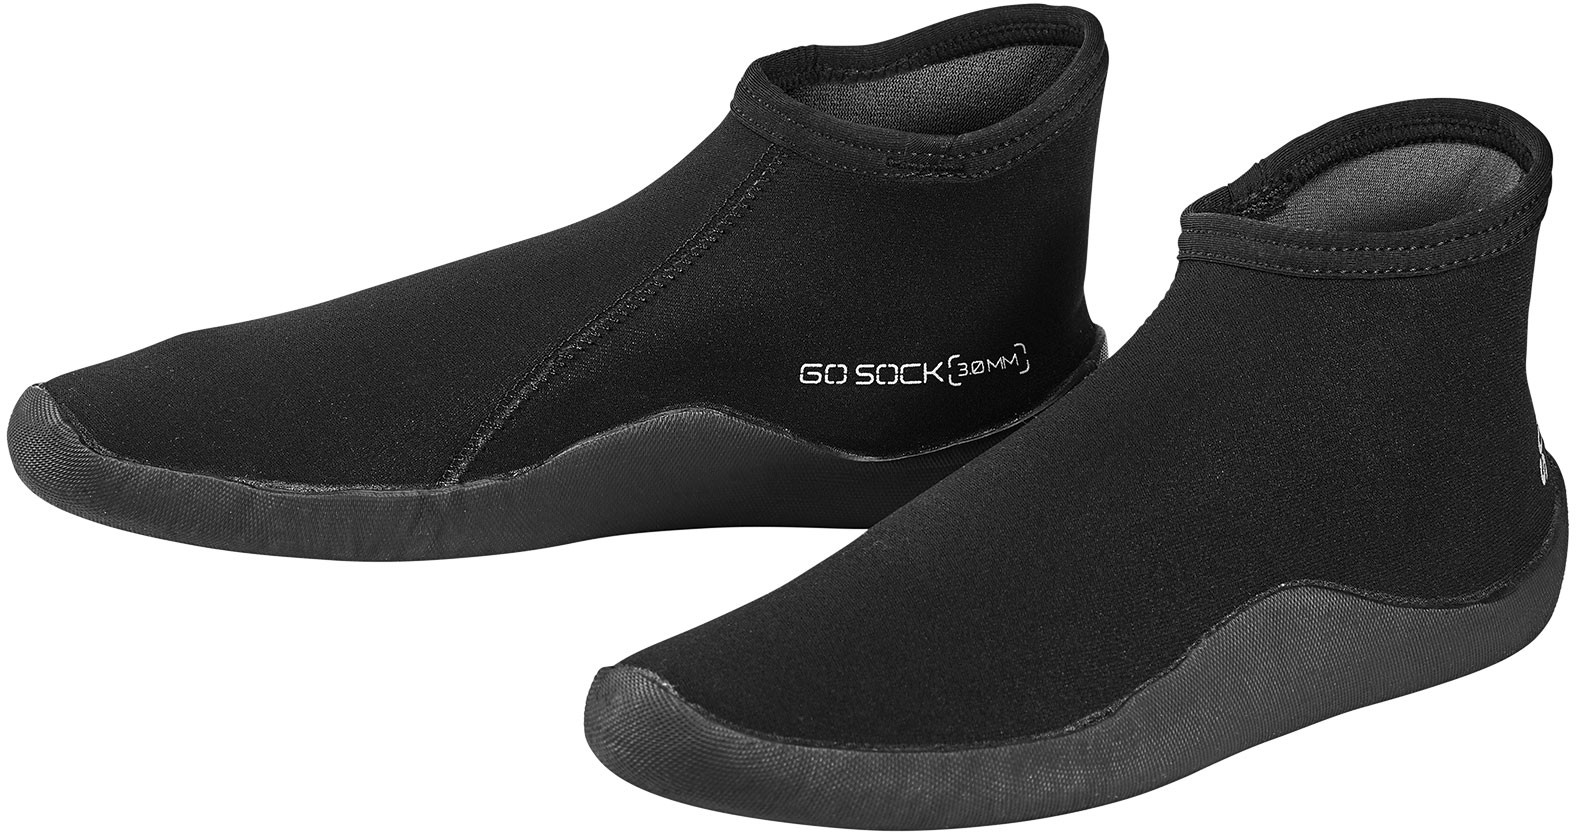 ScubaPro 3mm Thin Sole Go Sock